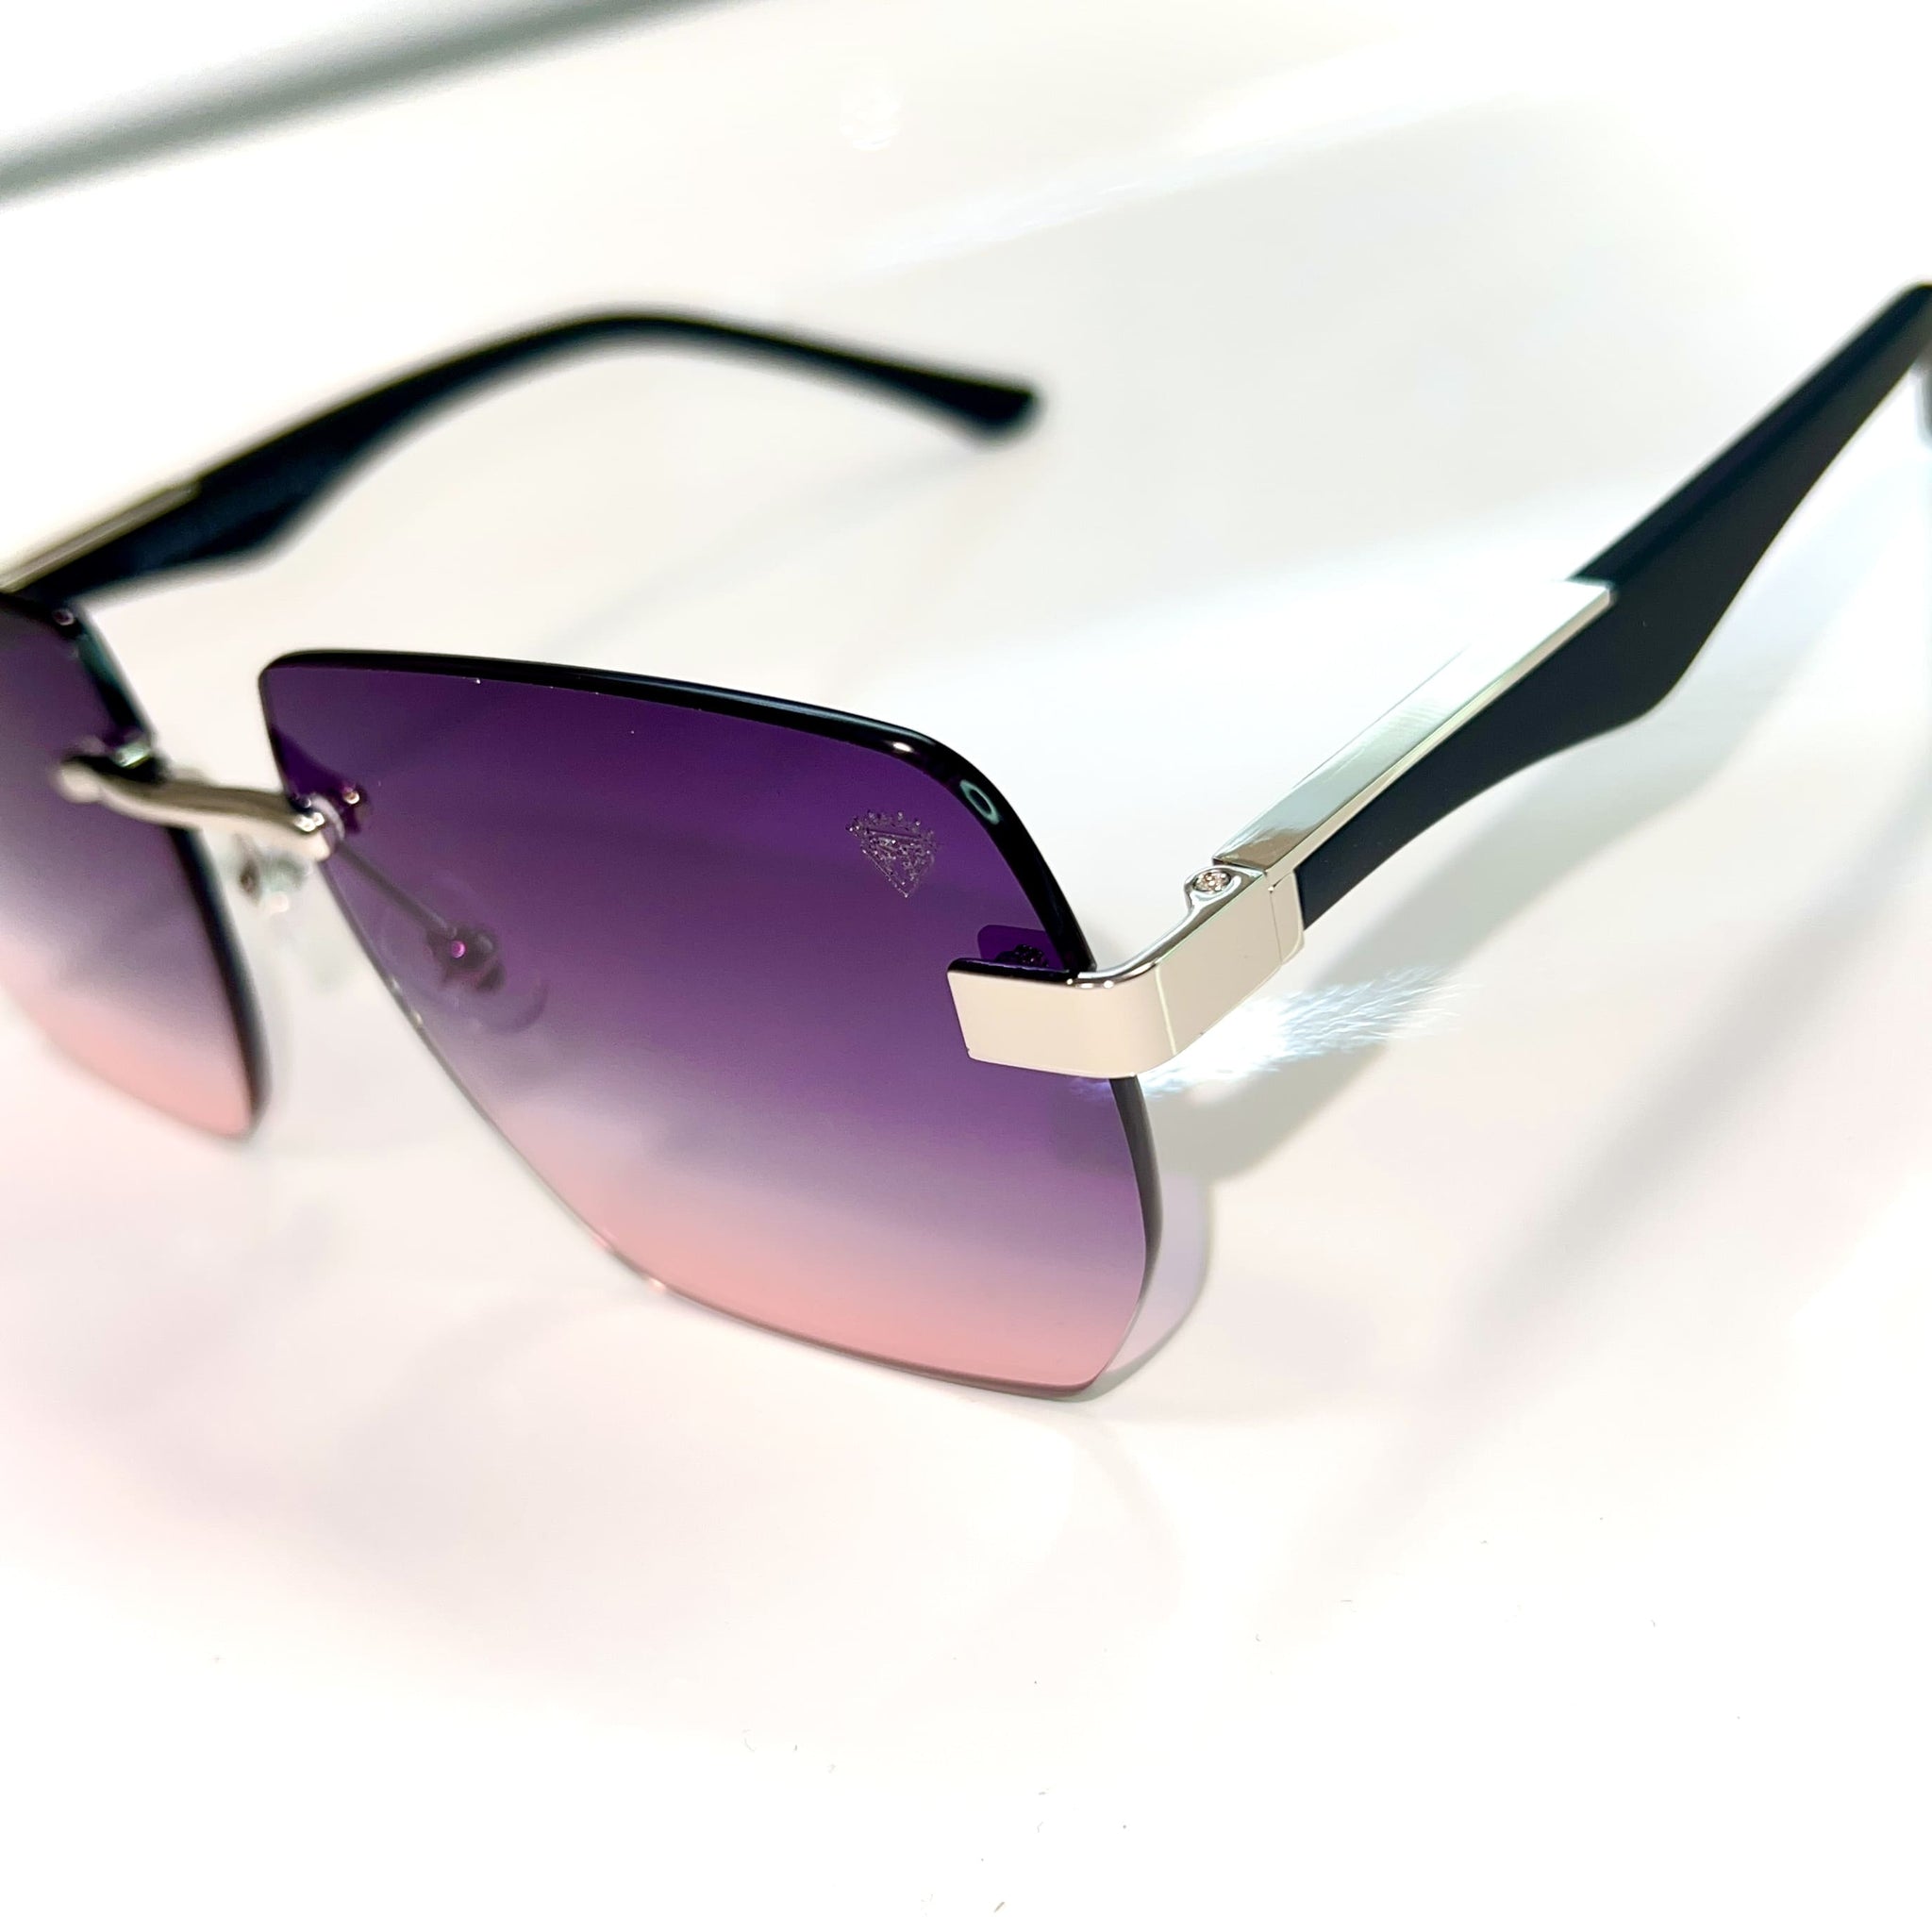 Dubai Glasses - Silver 925 plated / Silicon side - Purple Shade - Sehgal Glasses